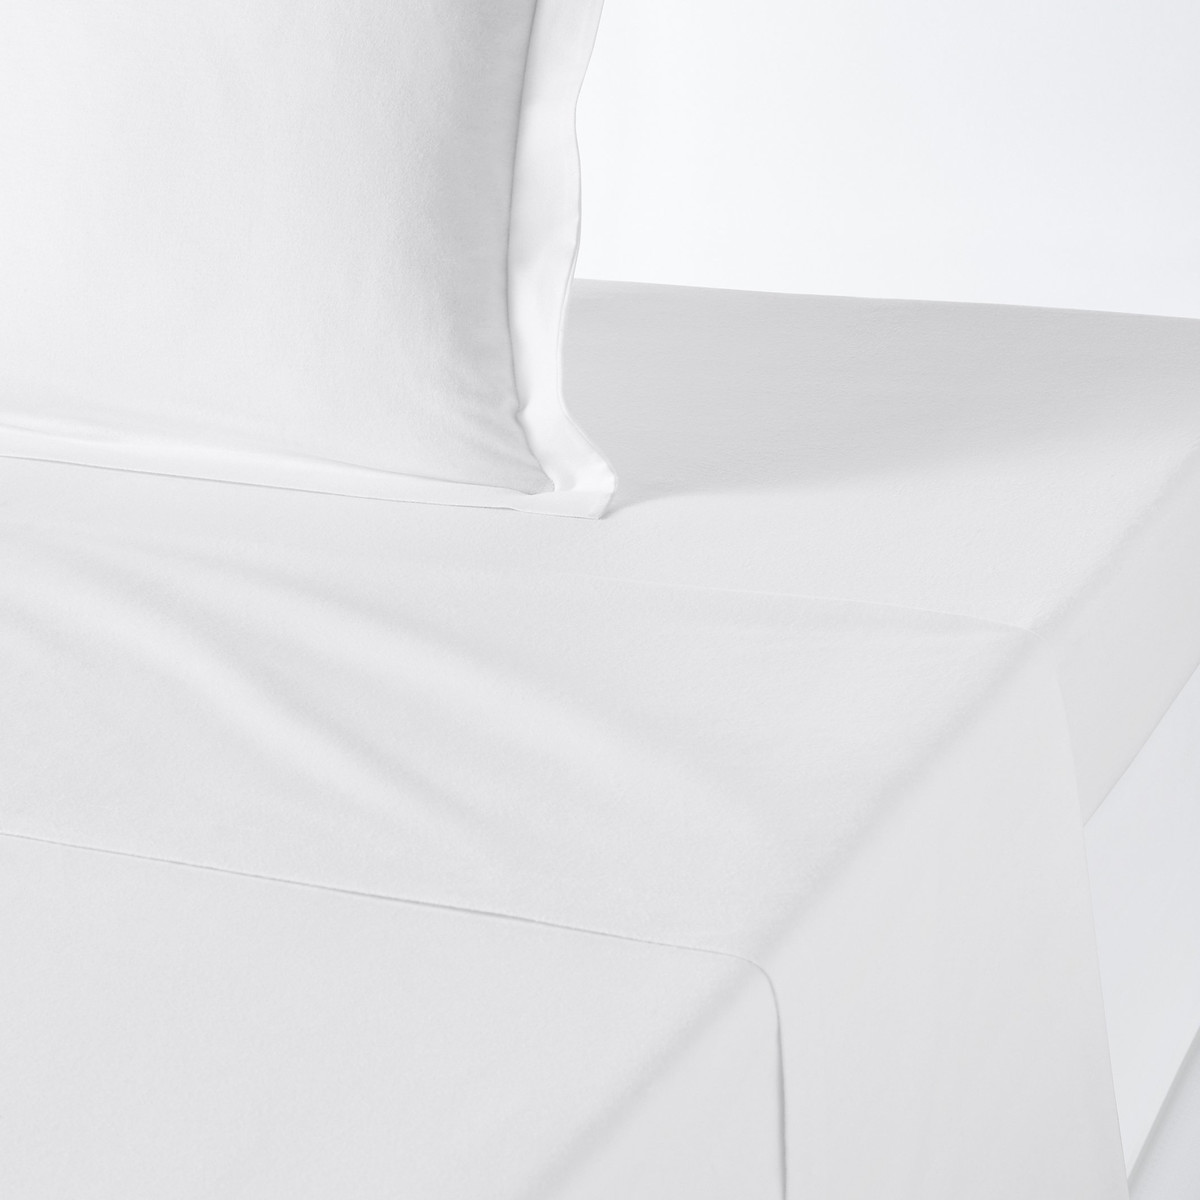 Простыня La Redoute Из фланели SCENARIO 270 x 290 см белый, размер 270 x 290 см - фото 1